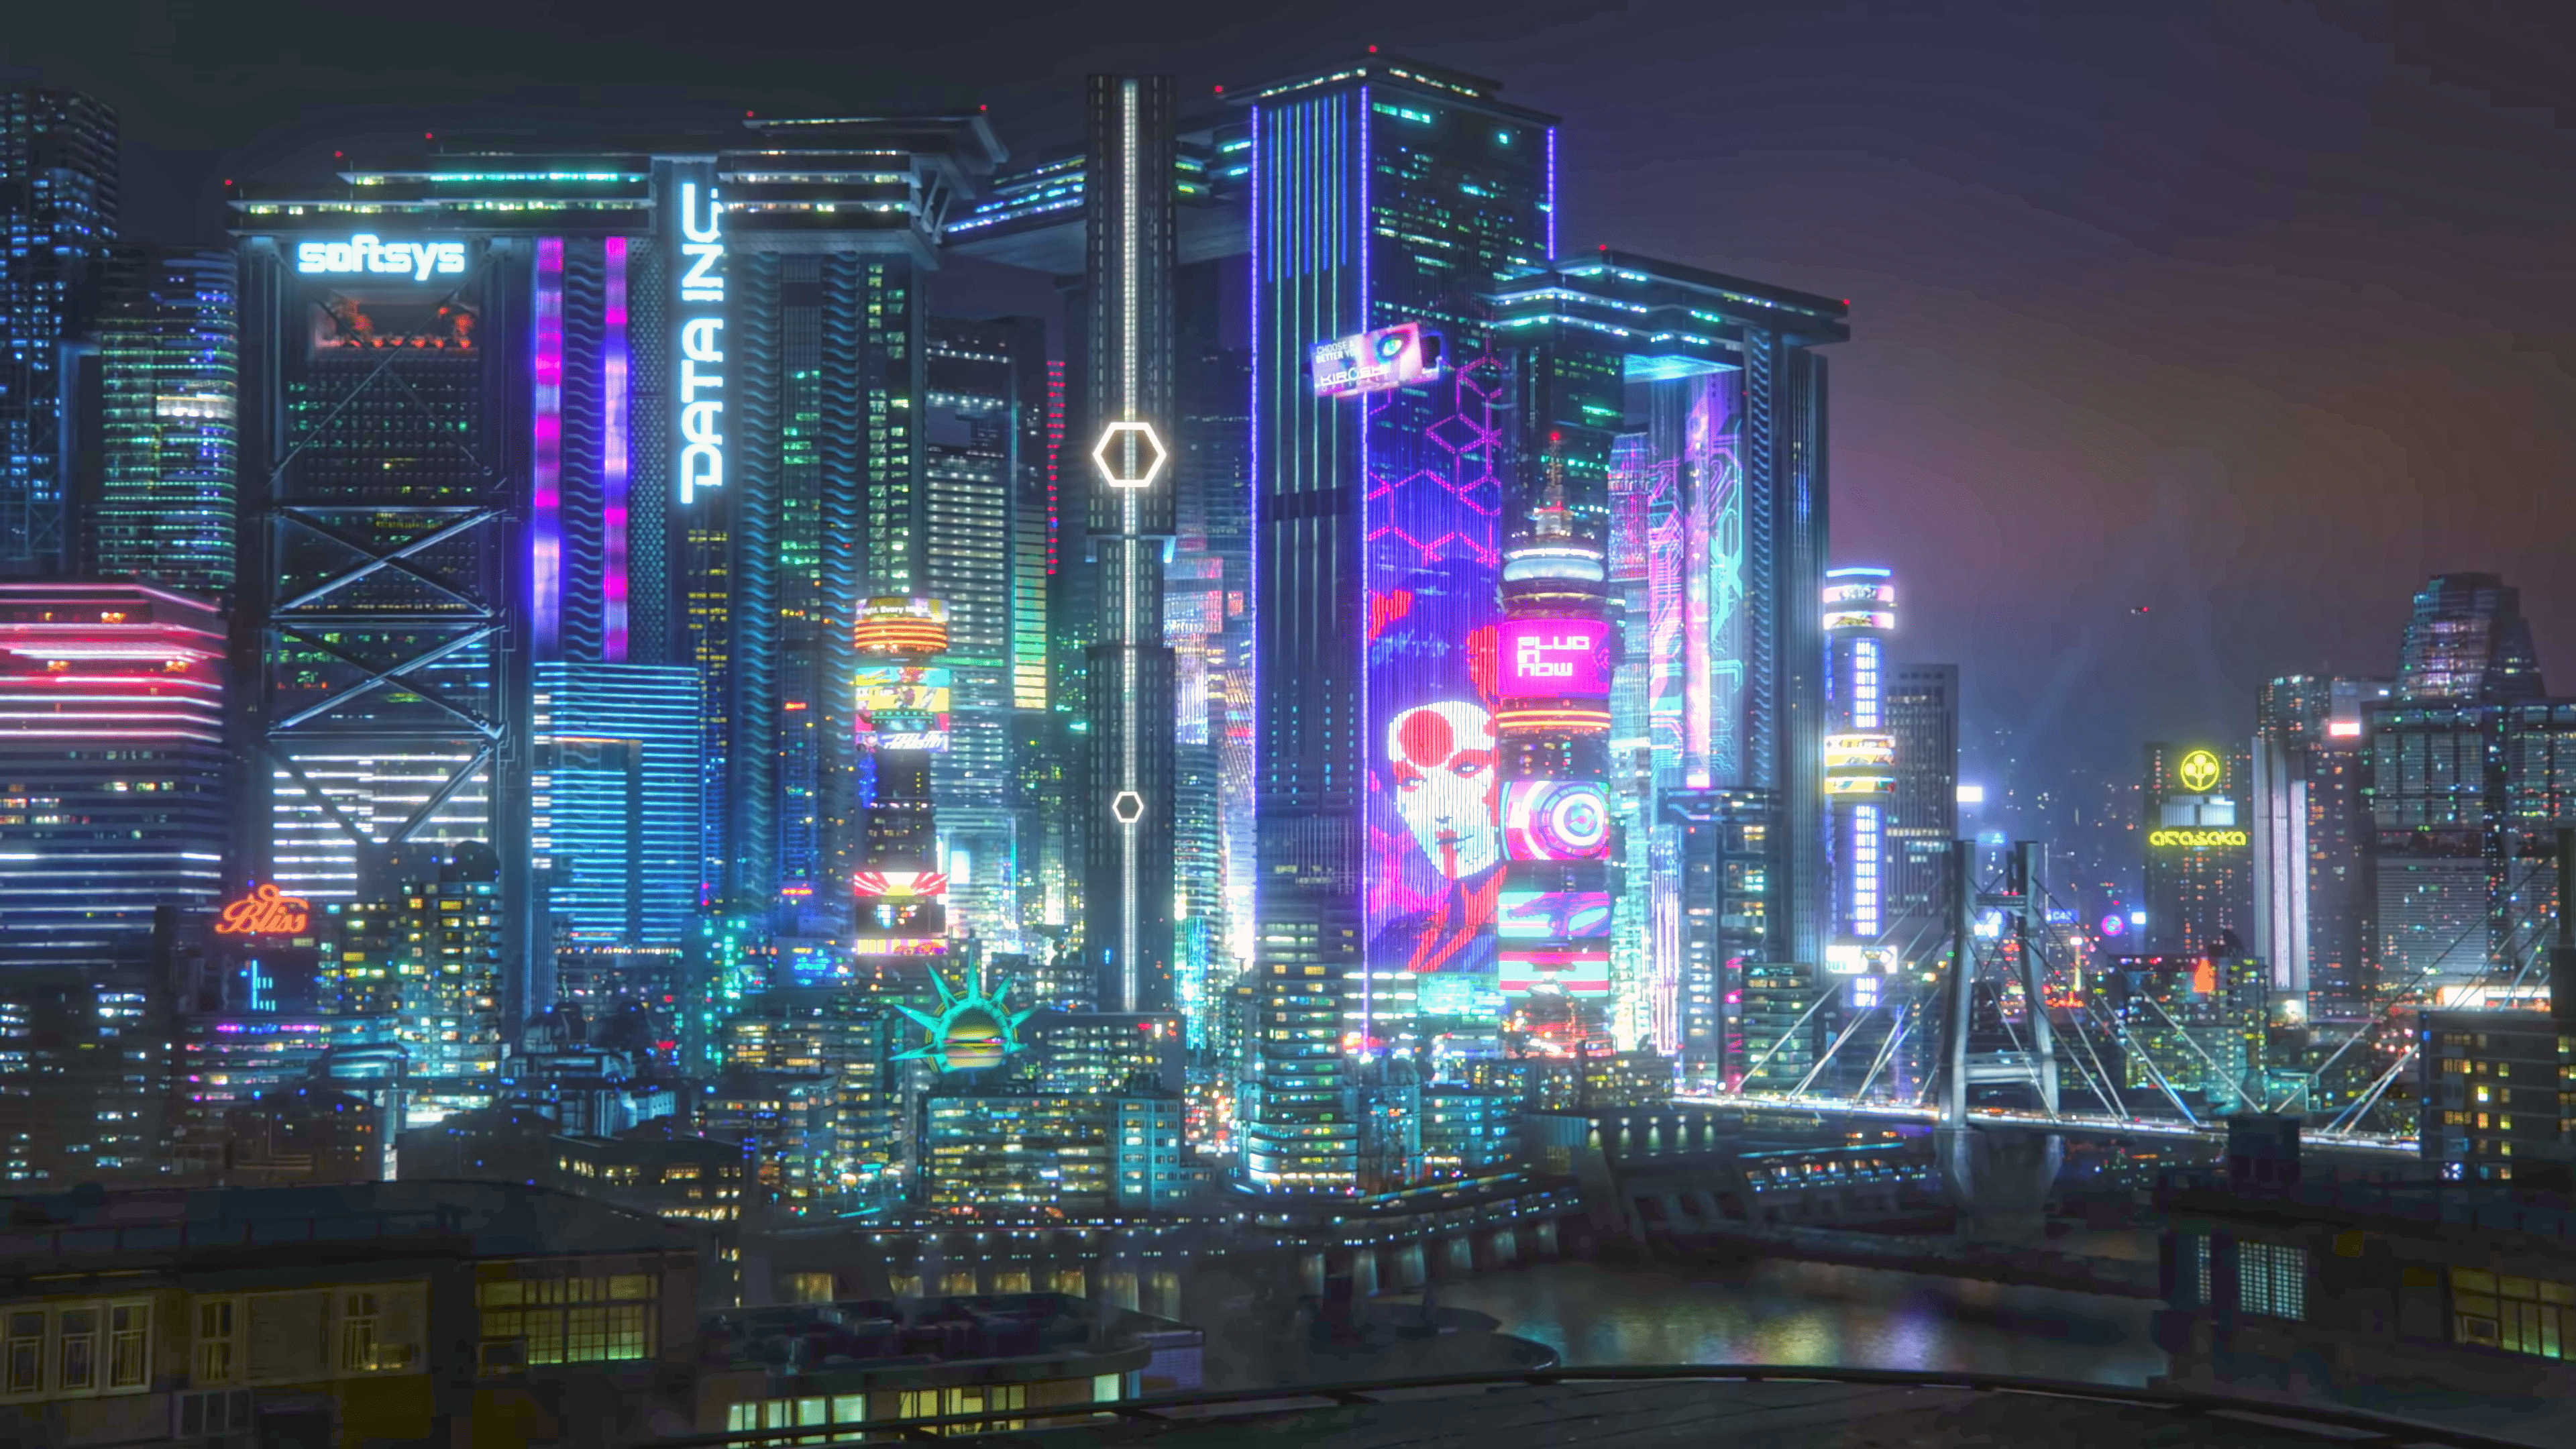 Cyberpunk Night City Wallpapers - Top Free Cyberpunk Night City Backgrounds  - WallpaperAccess